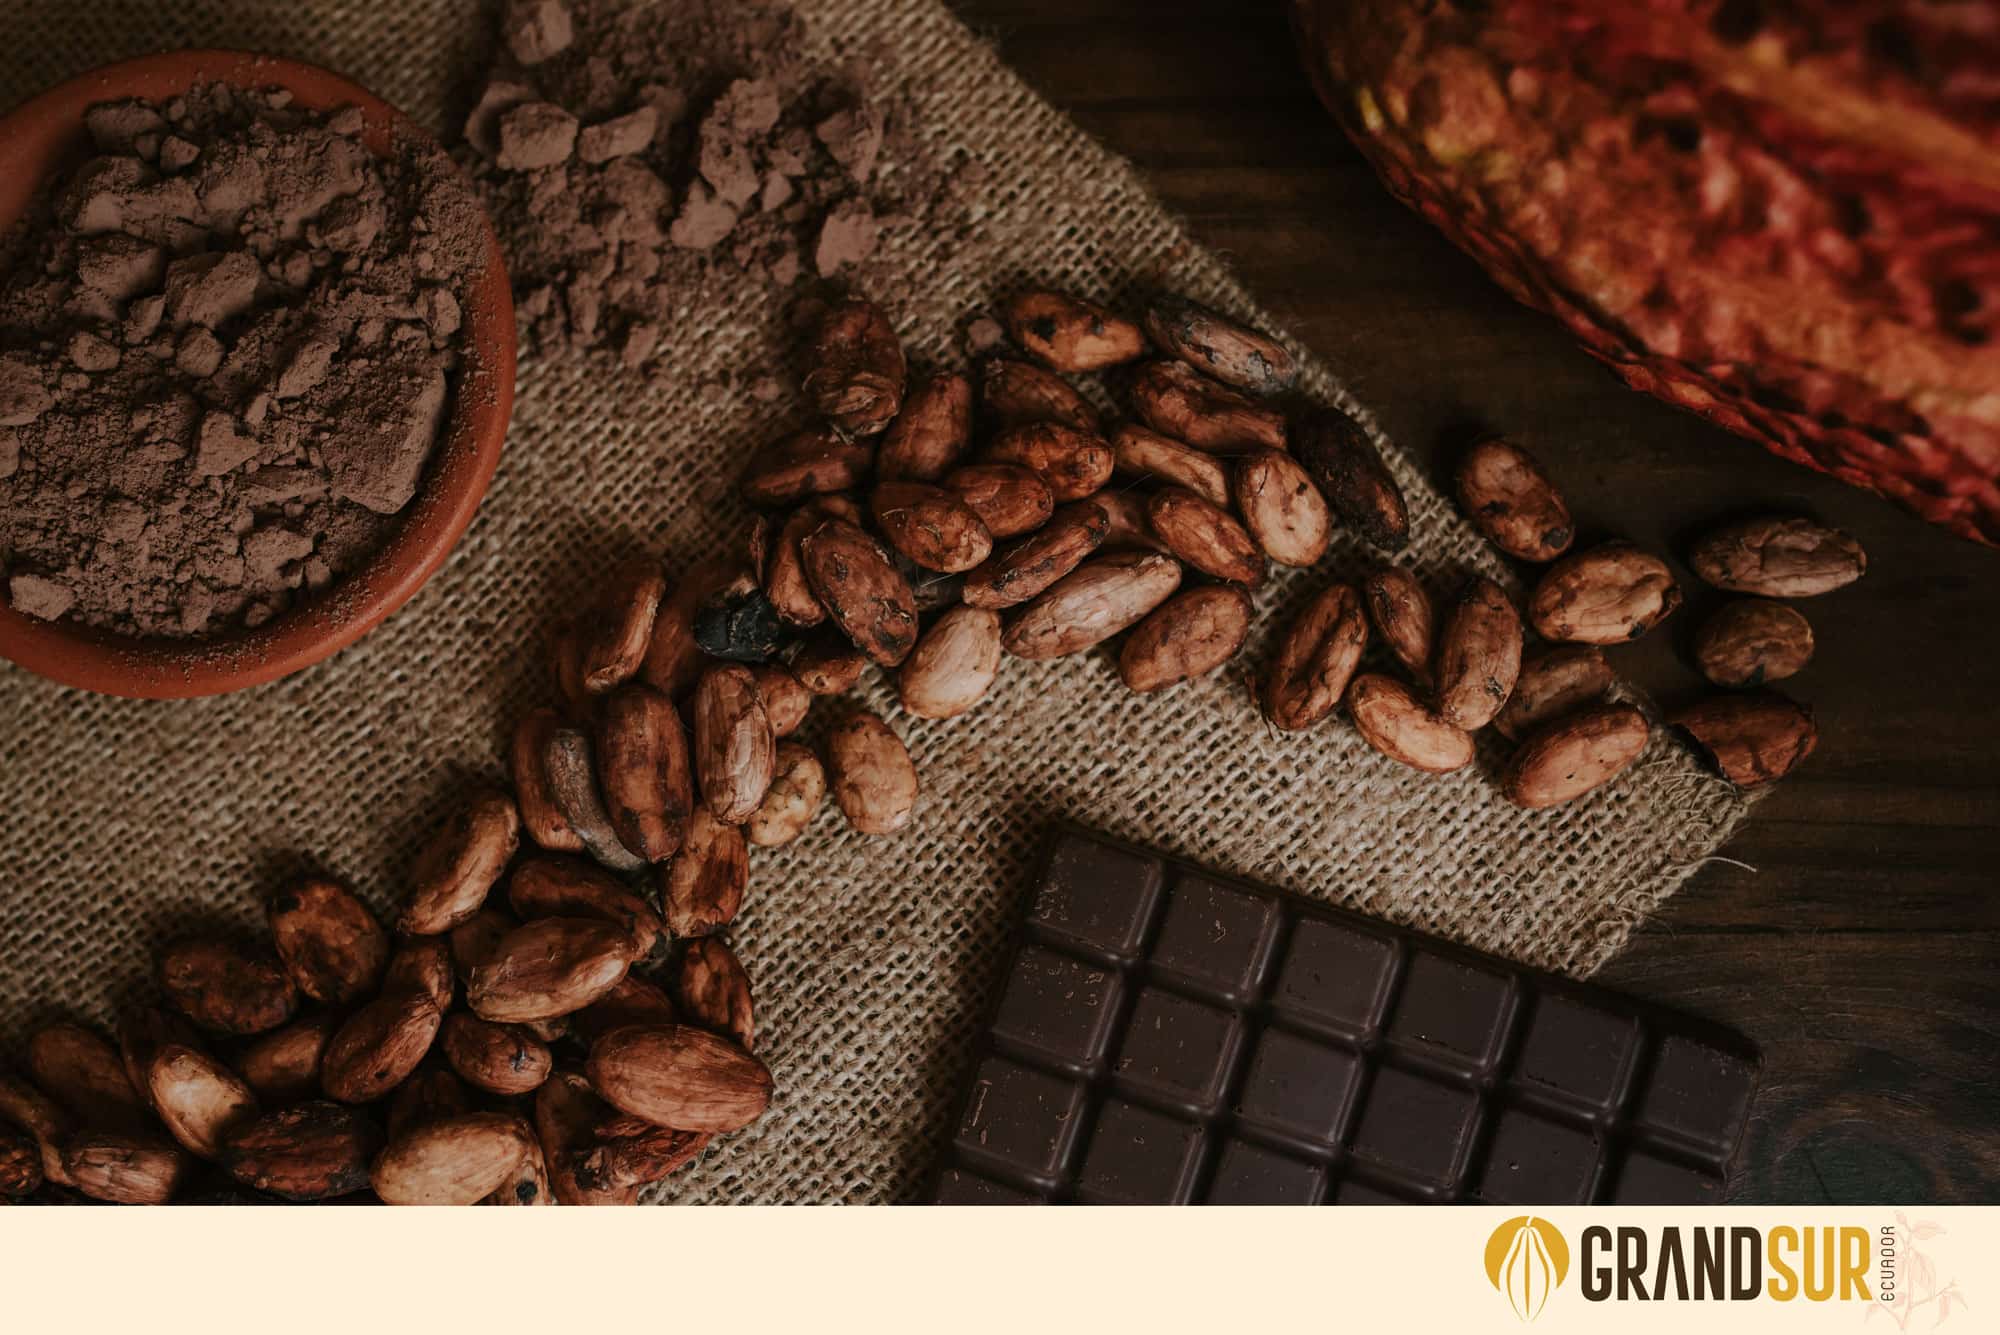 GrandSur celebra el dia mundial del cacao